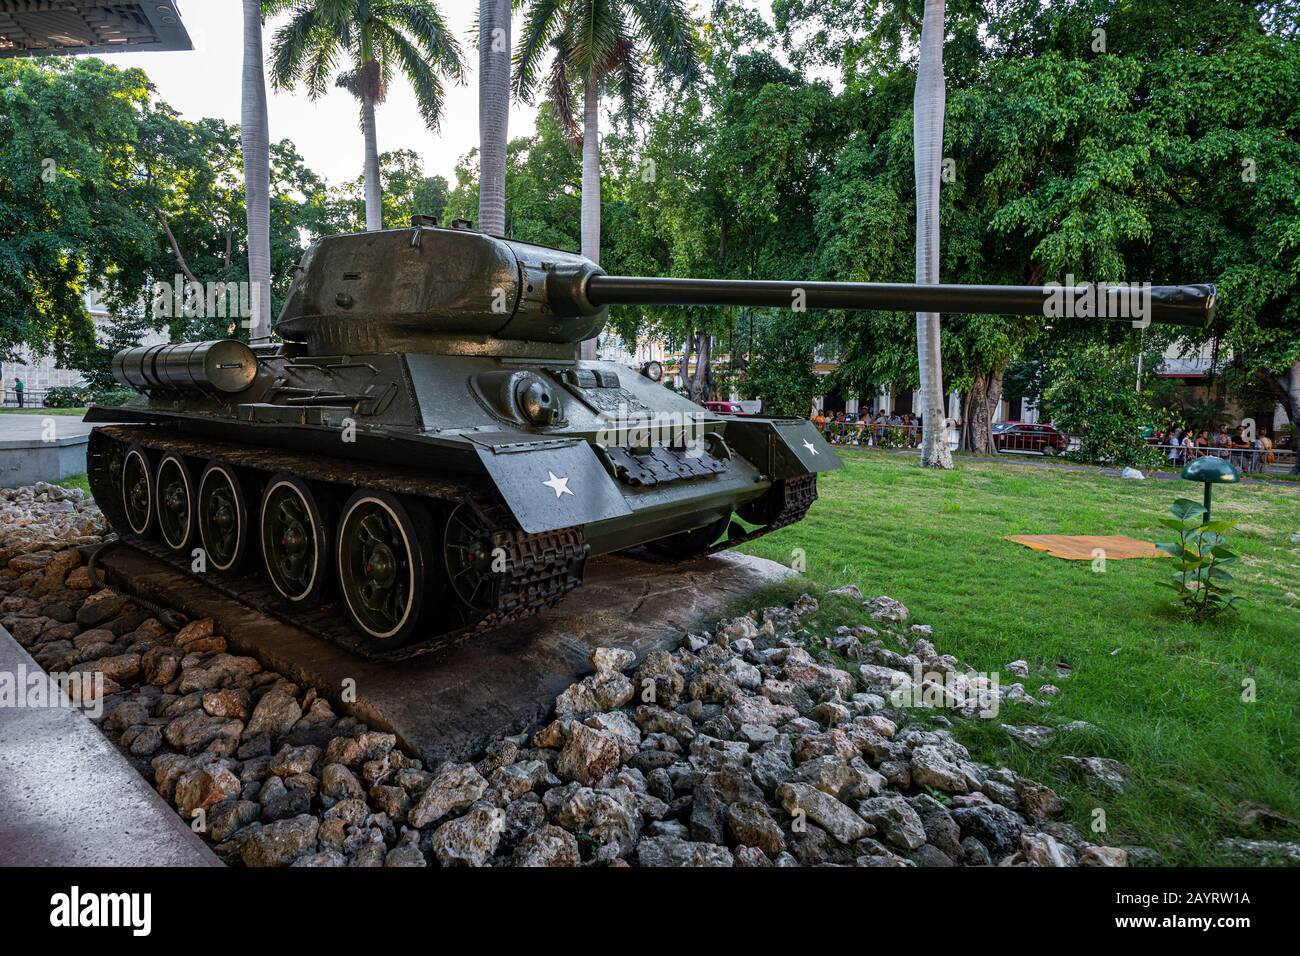 November 27, 2019, Havana, Cuba: Soviet tank t-34 in Museum of the Revolution in Havana. Stock Photo